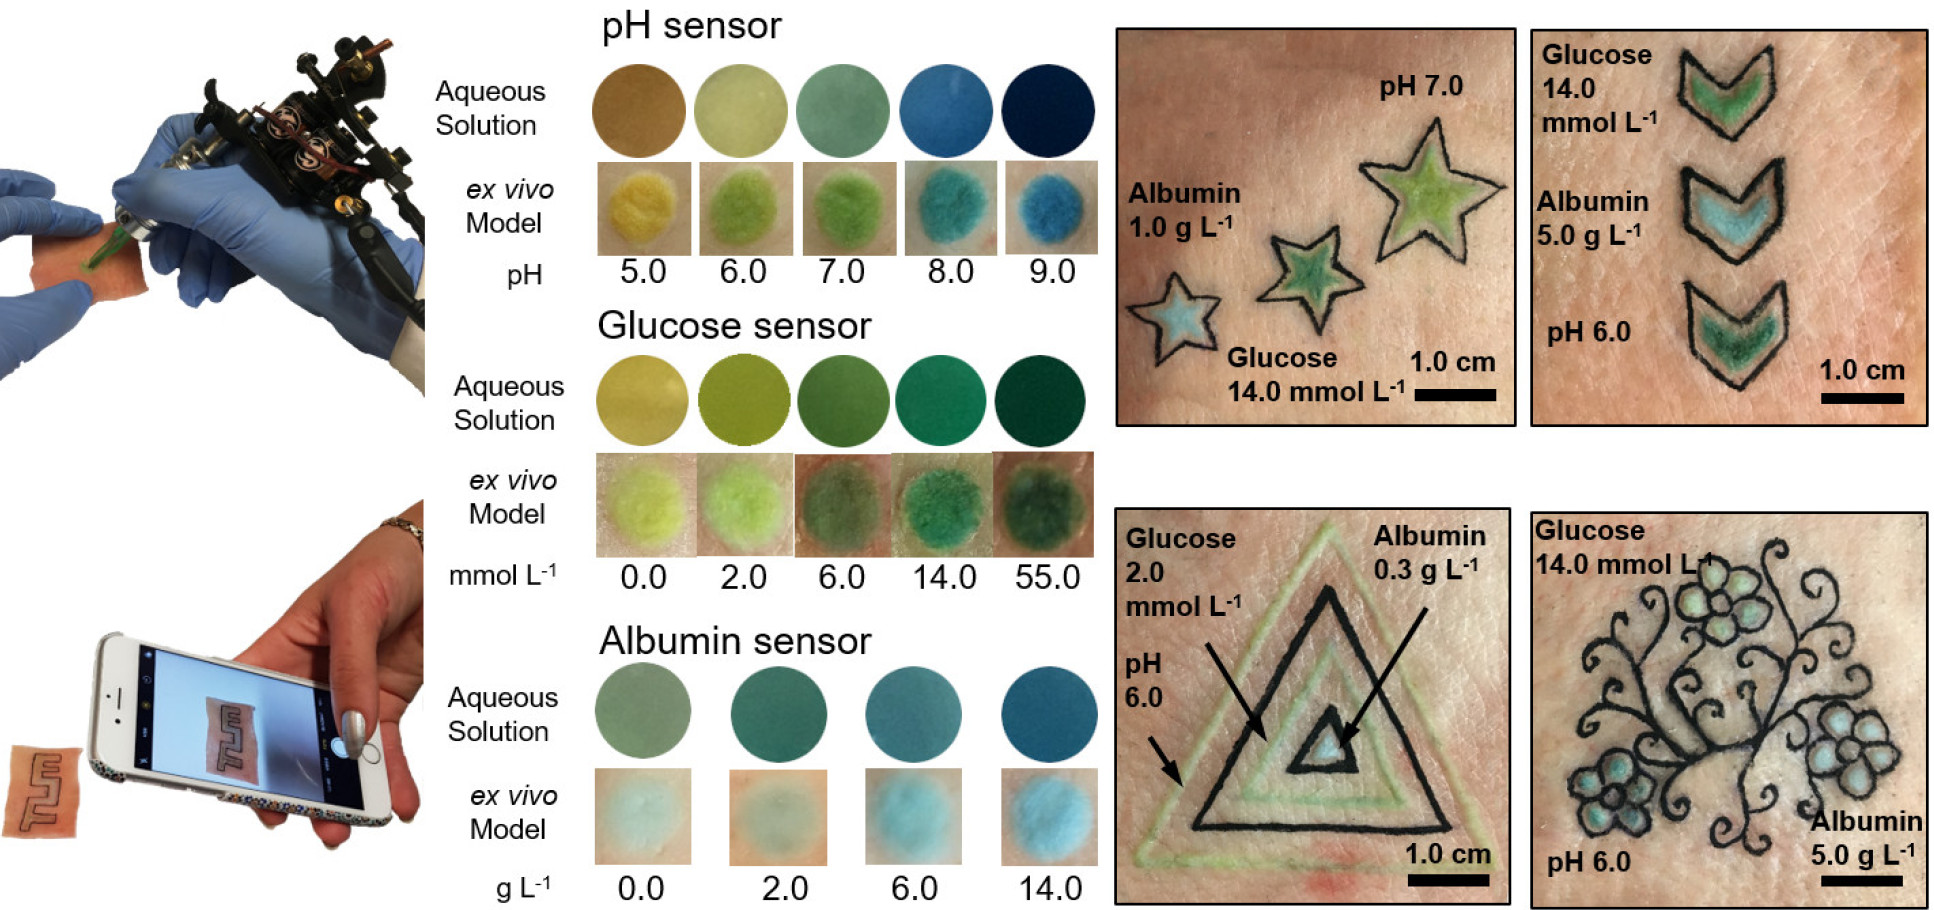 Dermal sensors and their applications.